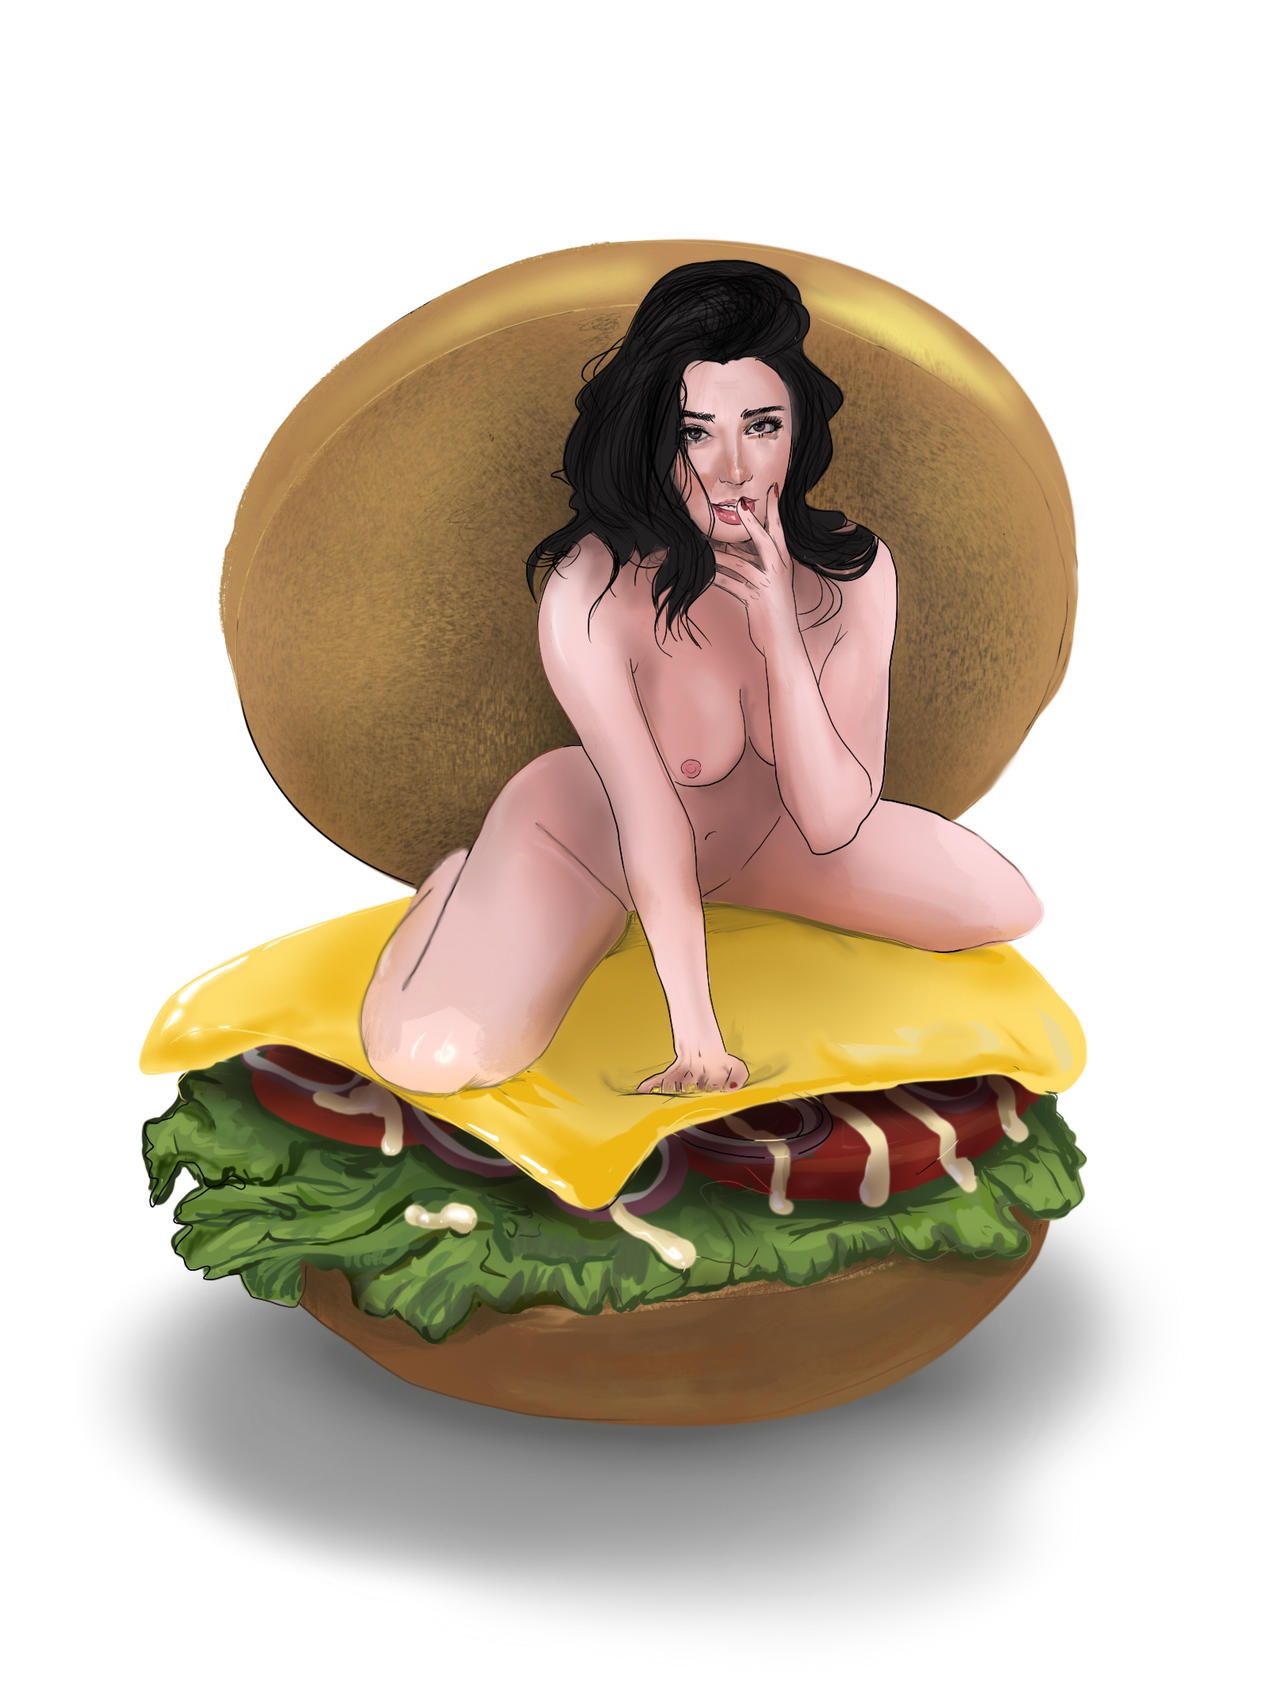 sexy_burger_by_epicureancanny_dfdm1kc-fullview.jpg